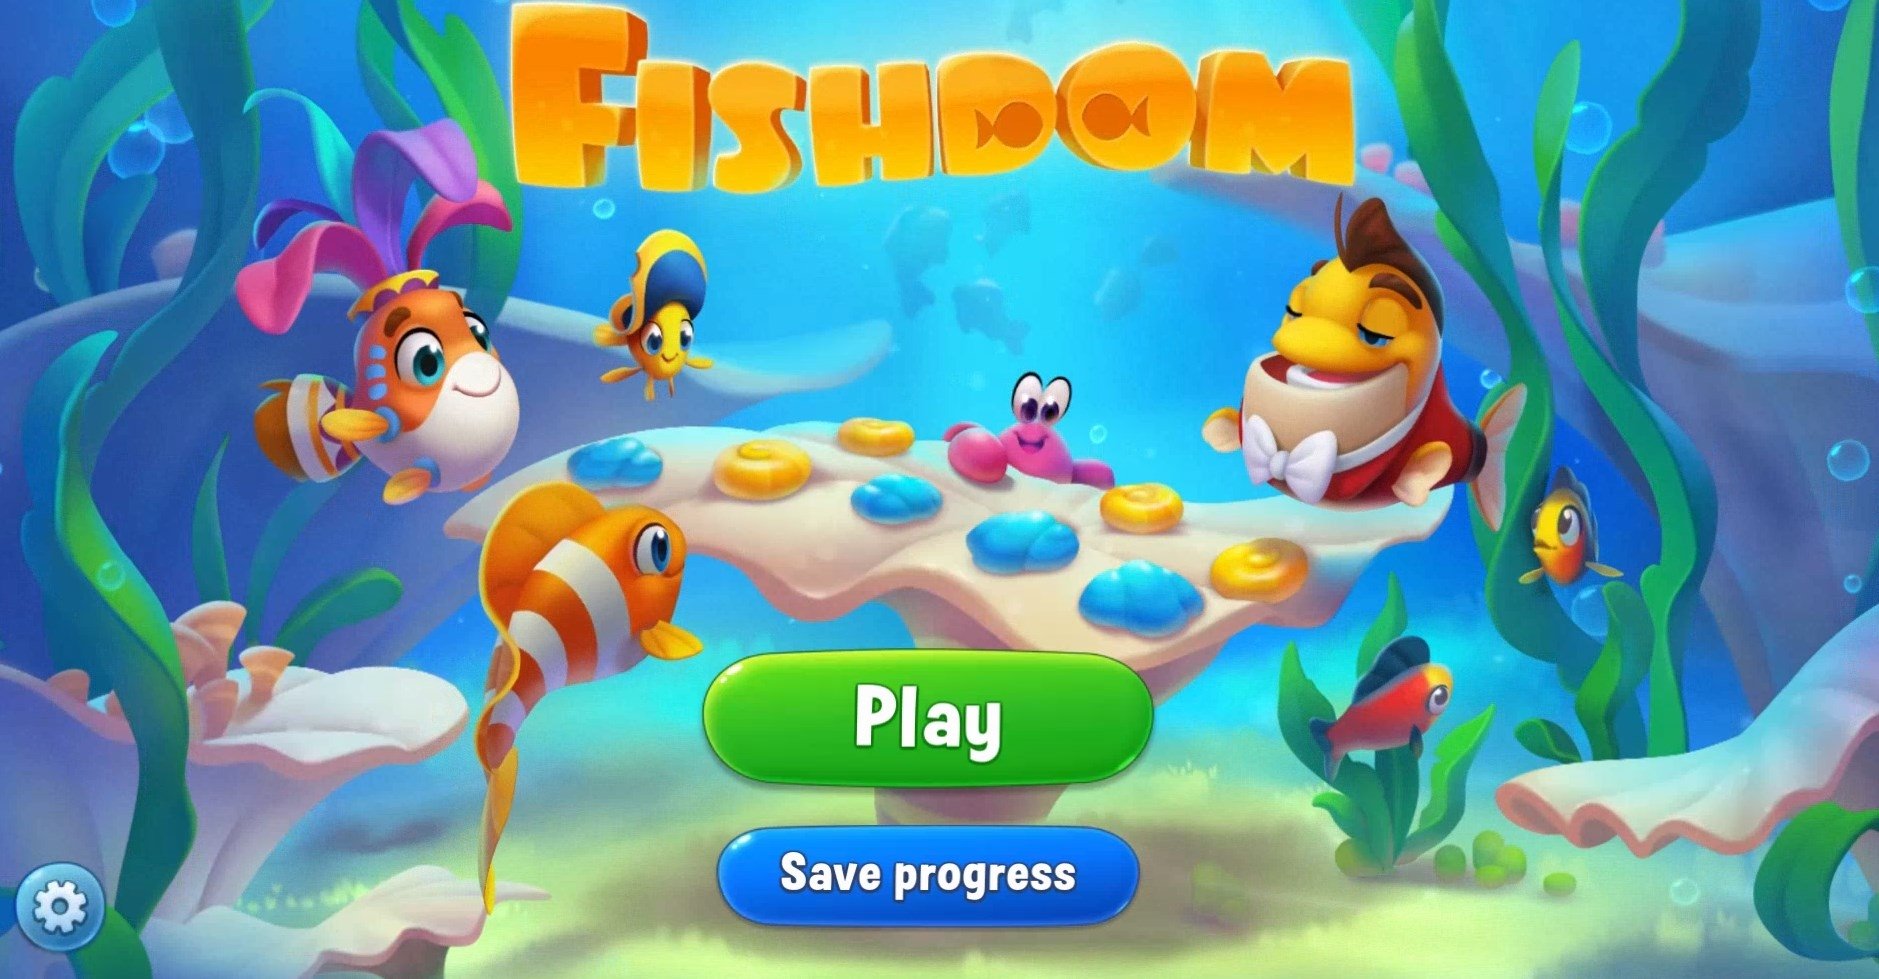 Fishdom for pc free download adobe flash cs5 tutorial pdf free download